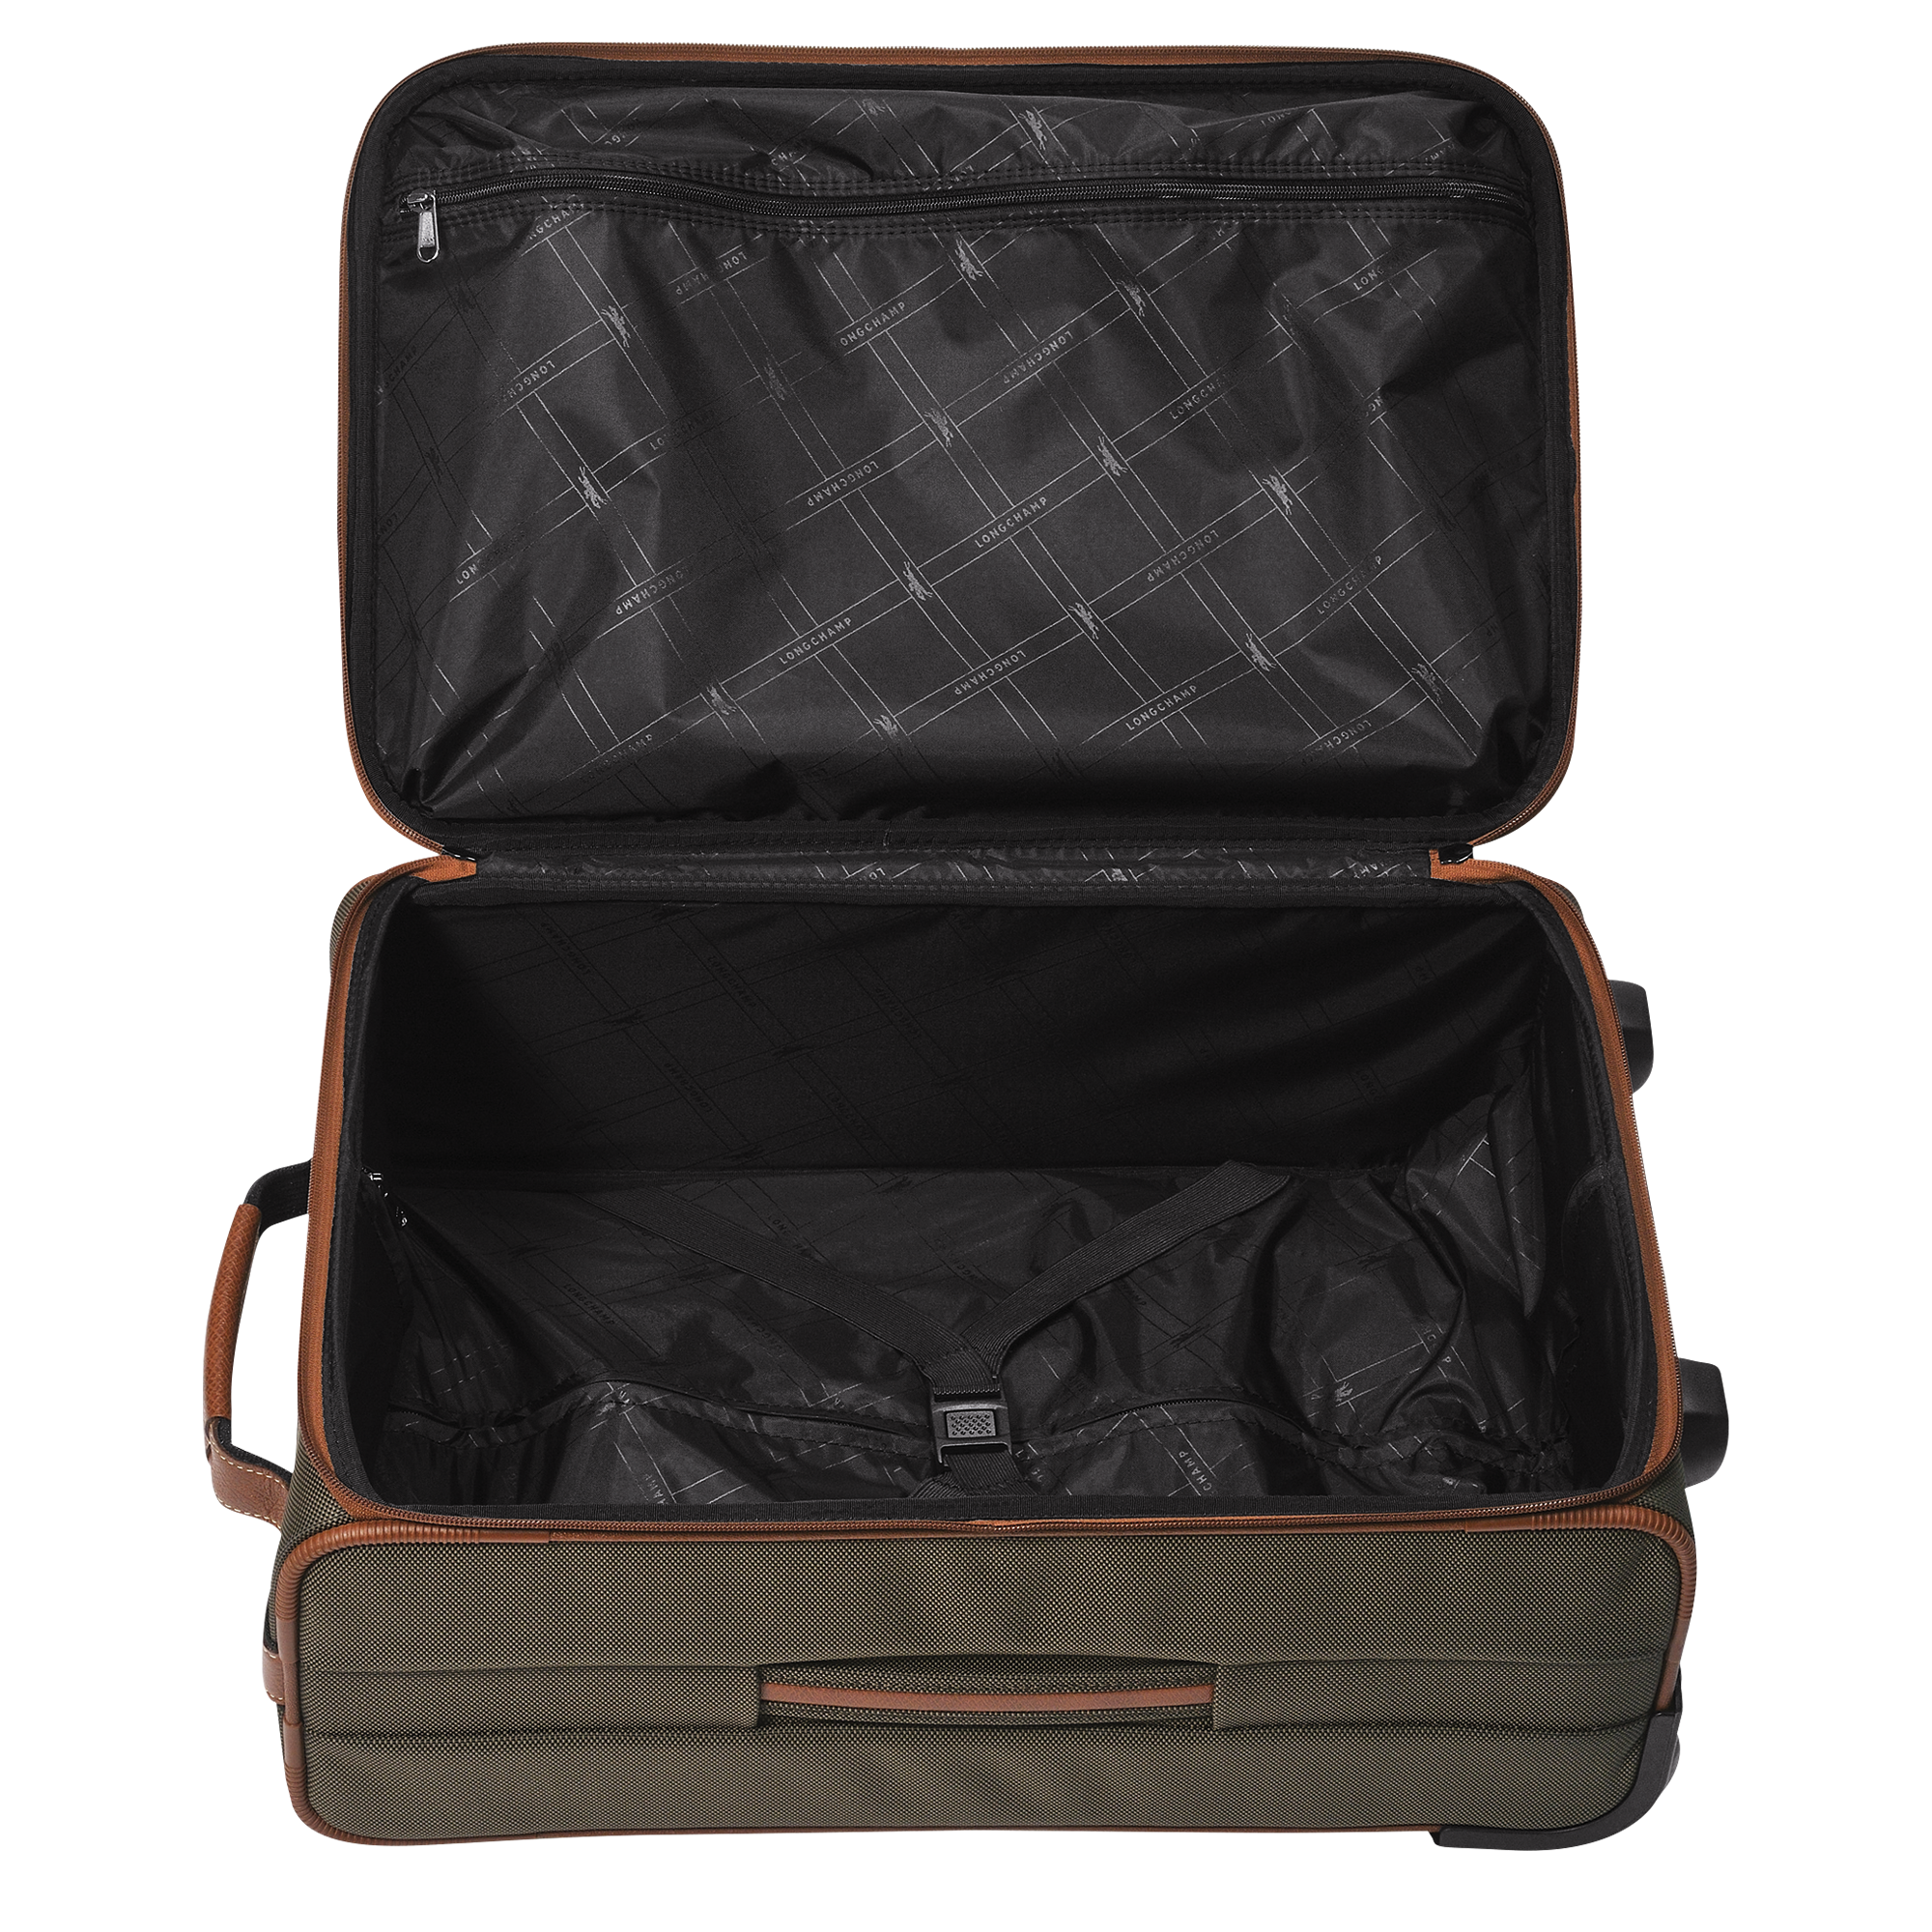 Boxford Suitcase M, Brown